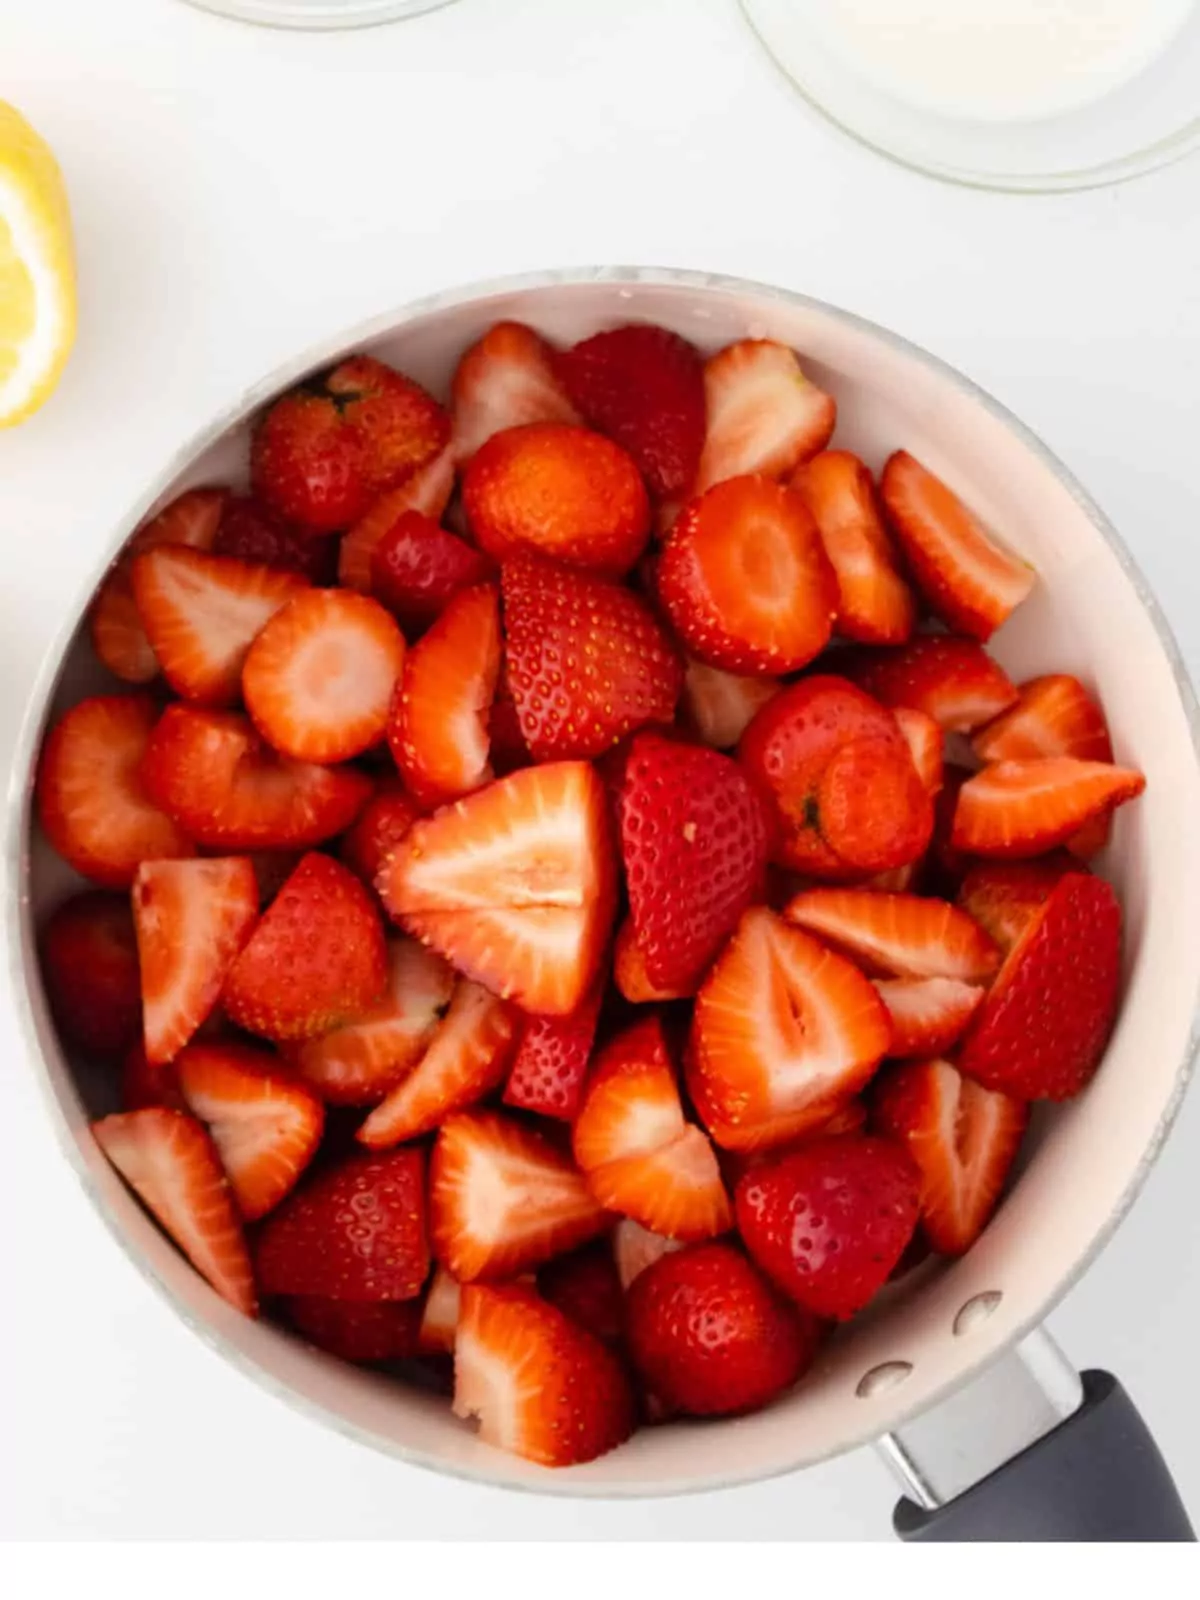 Add sliced strawberries to saucepan.